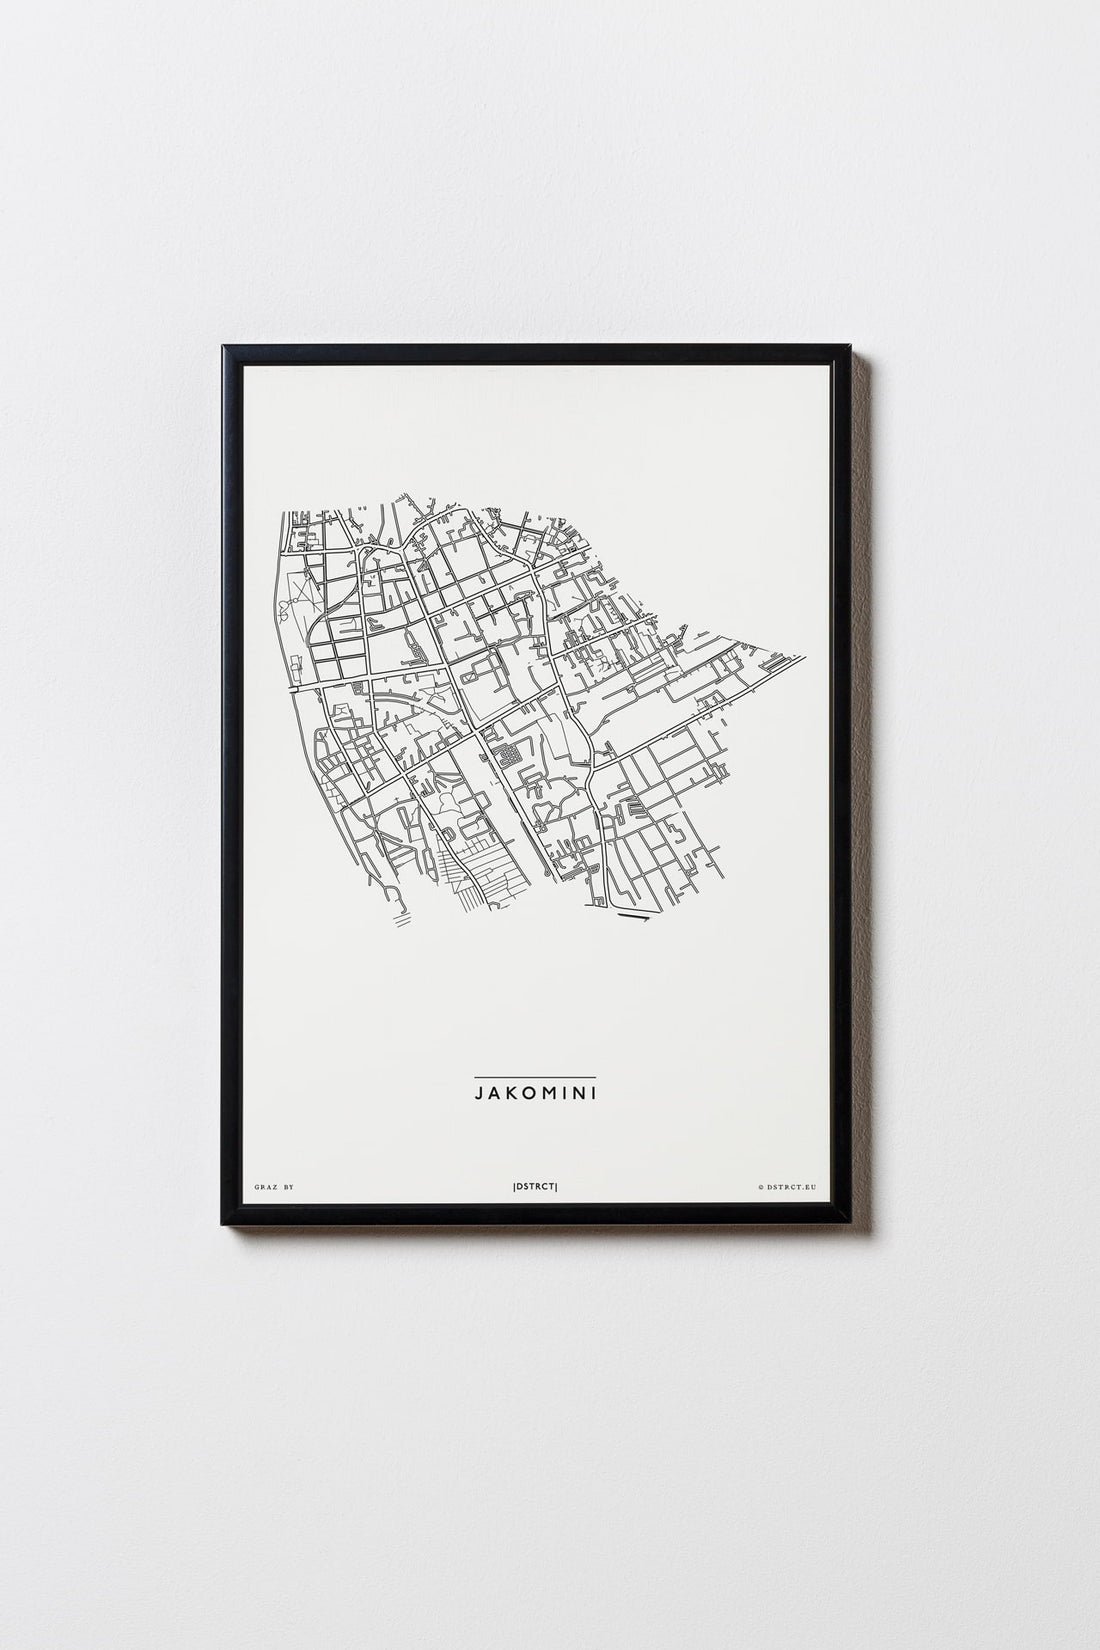 Jakomini | 8010 - 8042 | Graz | City Map Karte Plan Bild Print Poster Mit Rahmen Framed